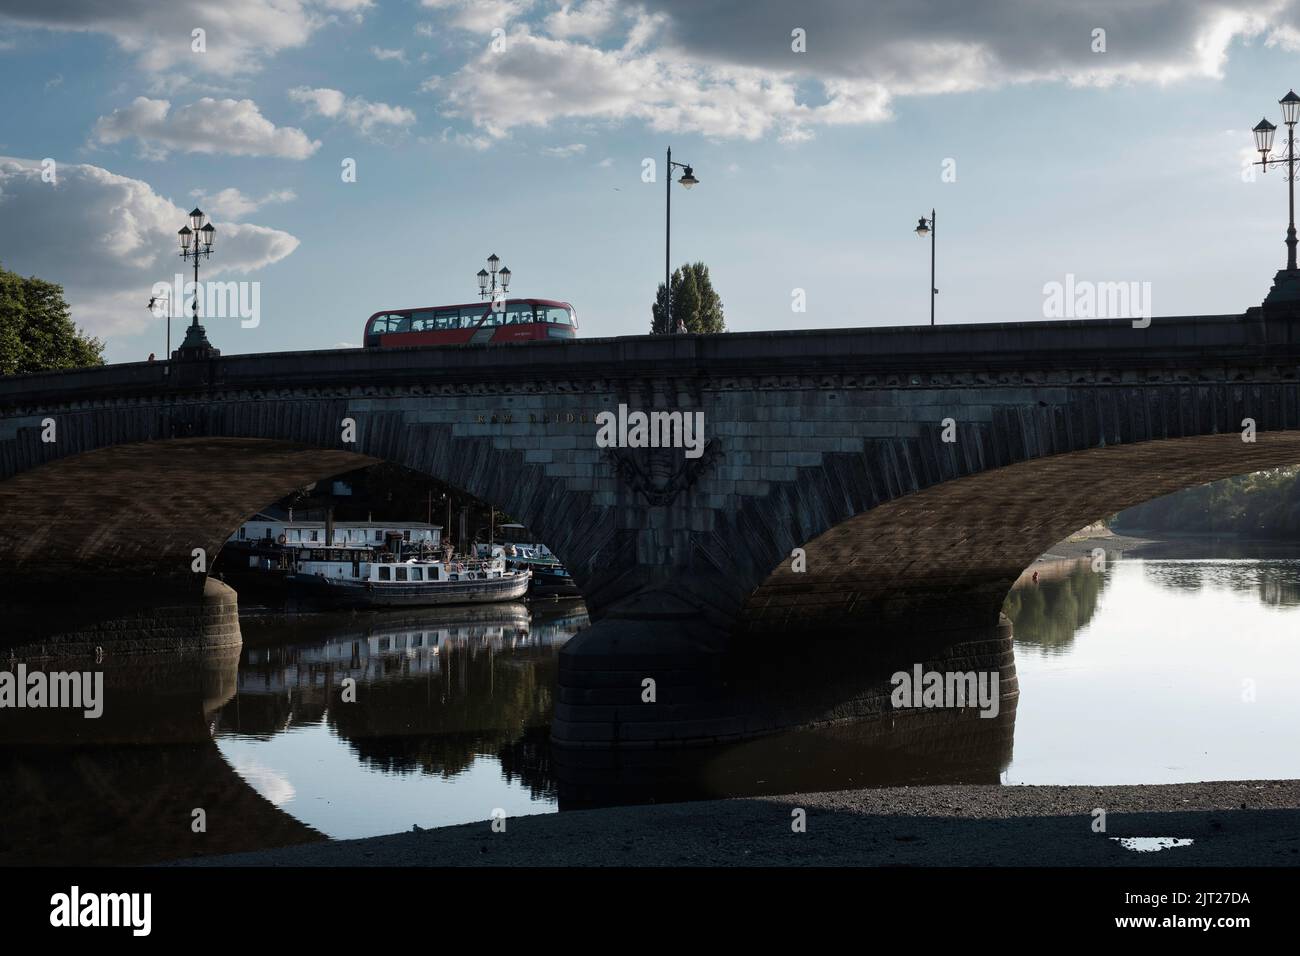 River Thames, Chiswick, London, United Kingdom Stock Photo